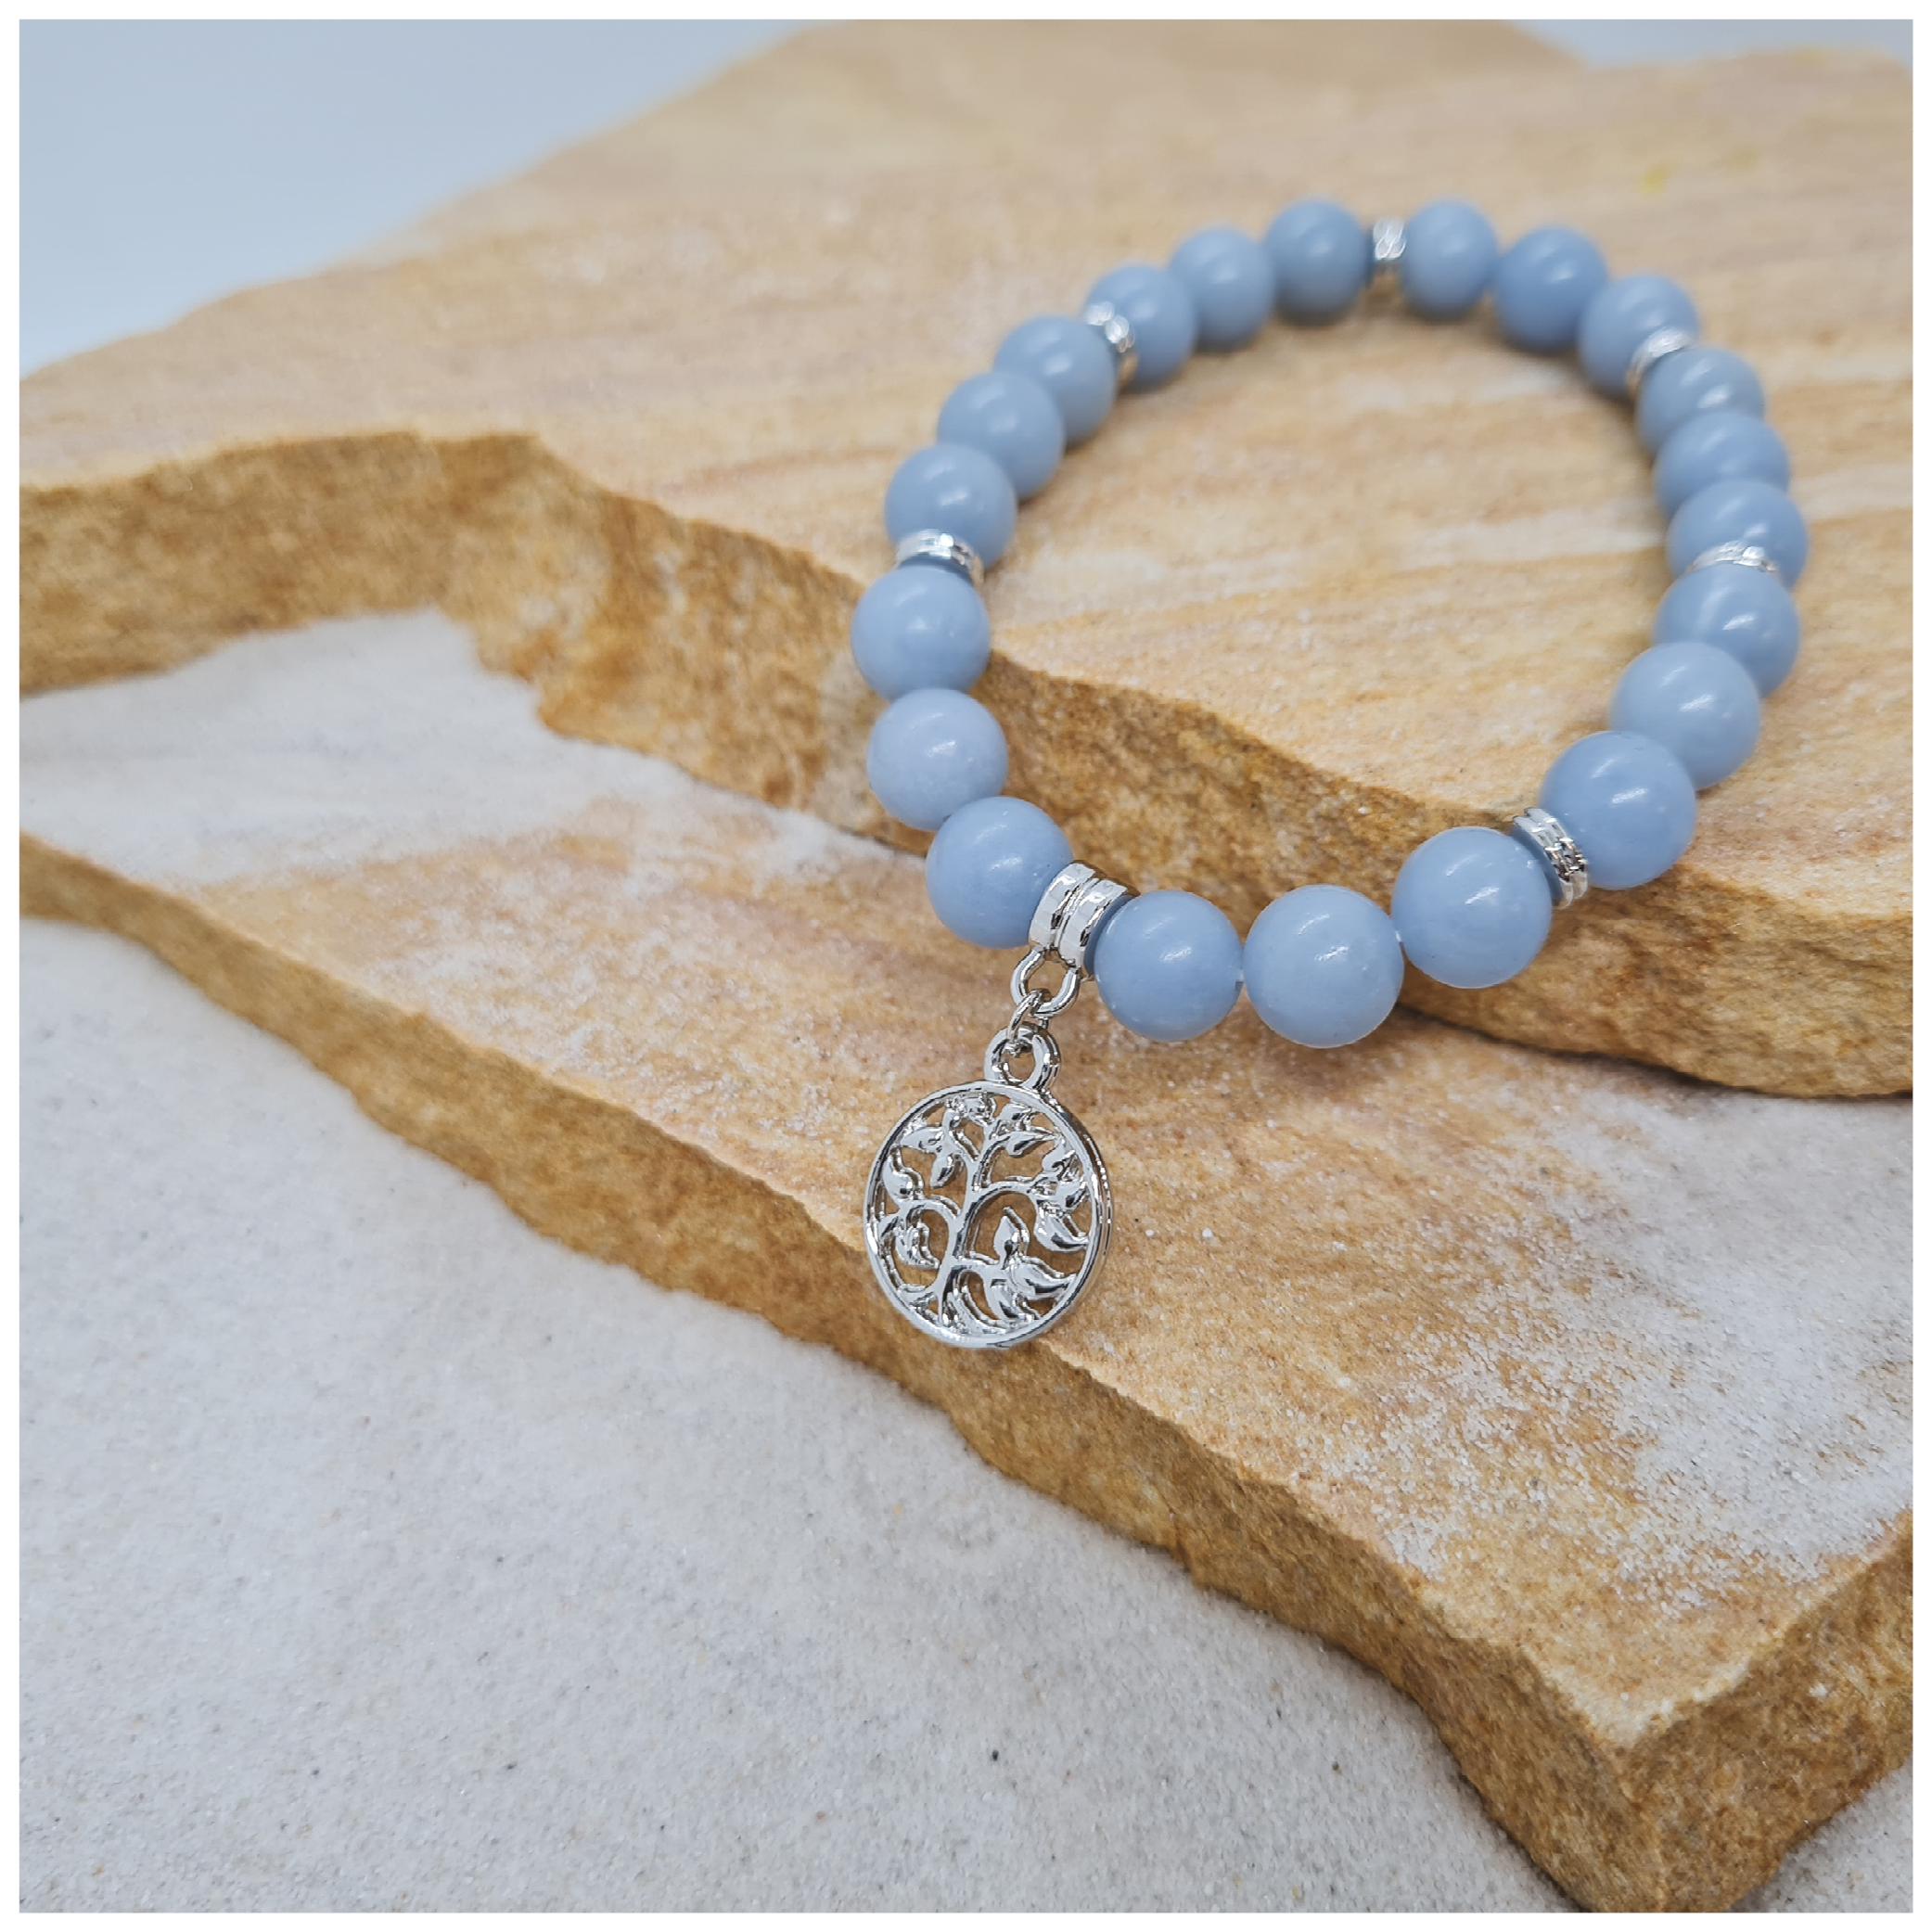 Angelite 8mm crystal bead bracelet with tree of life charm